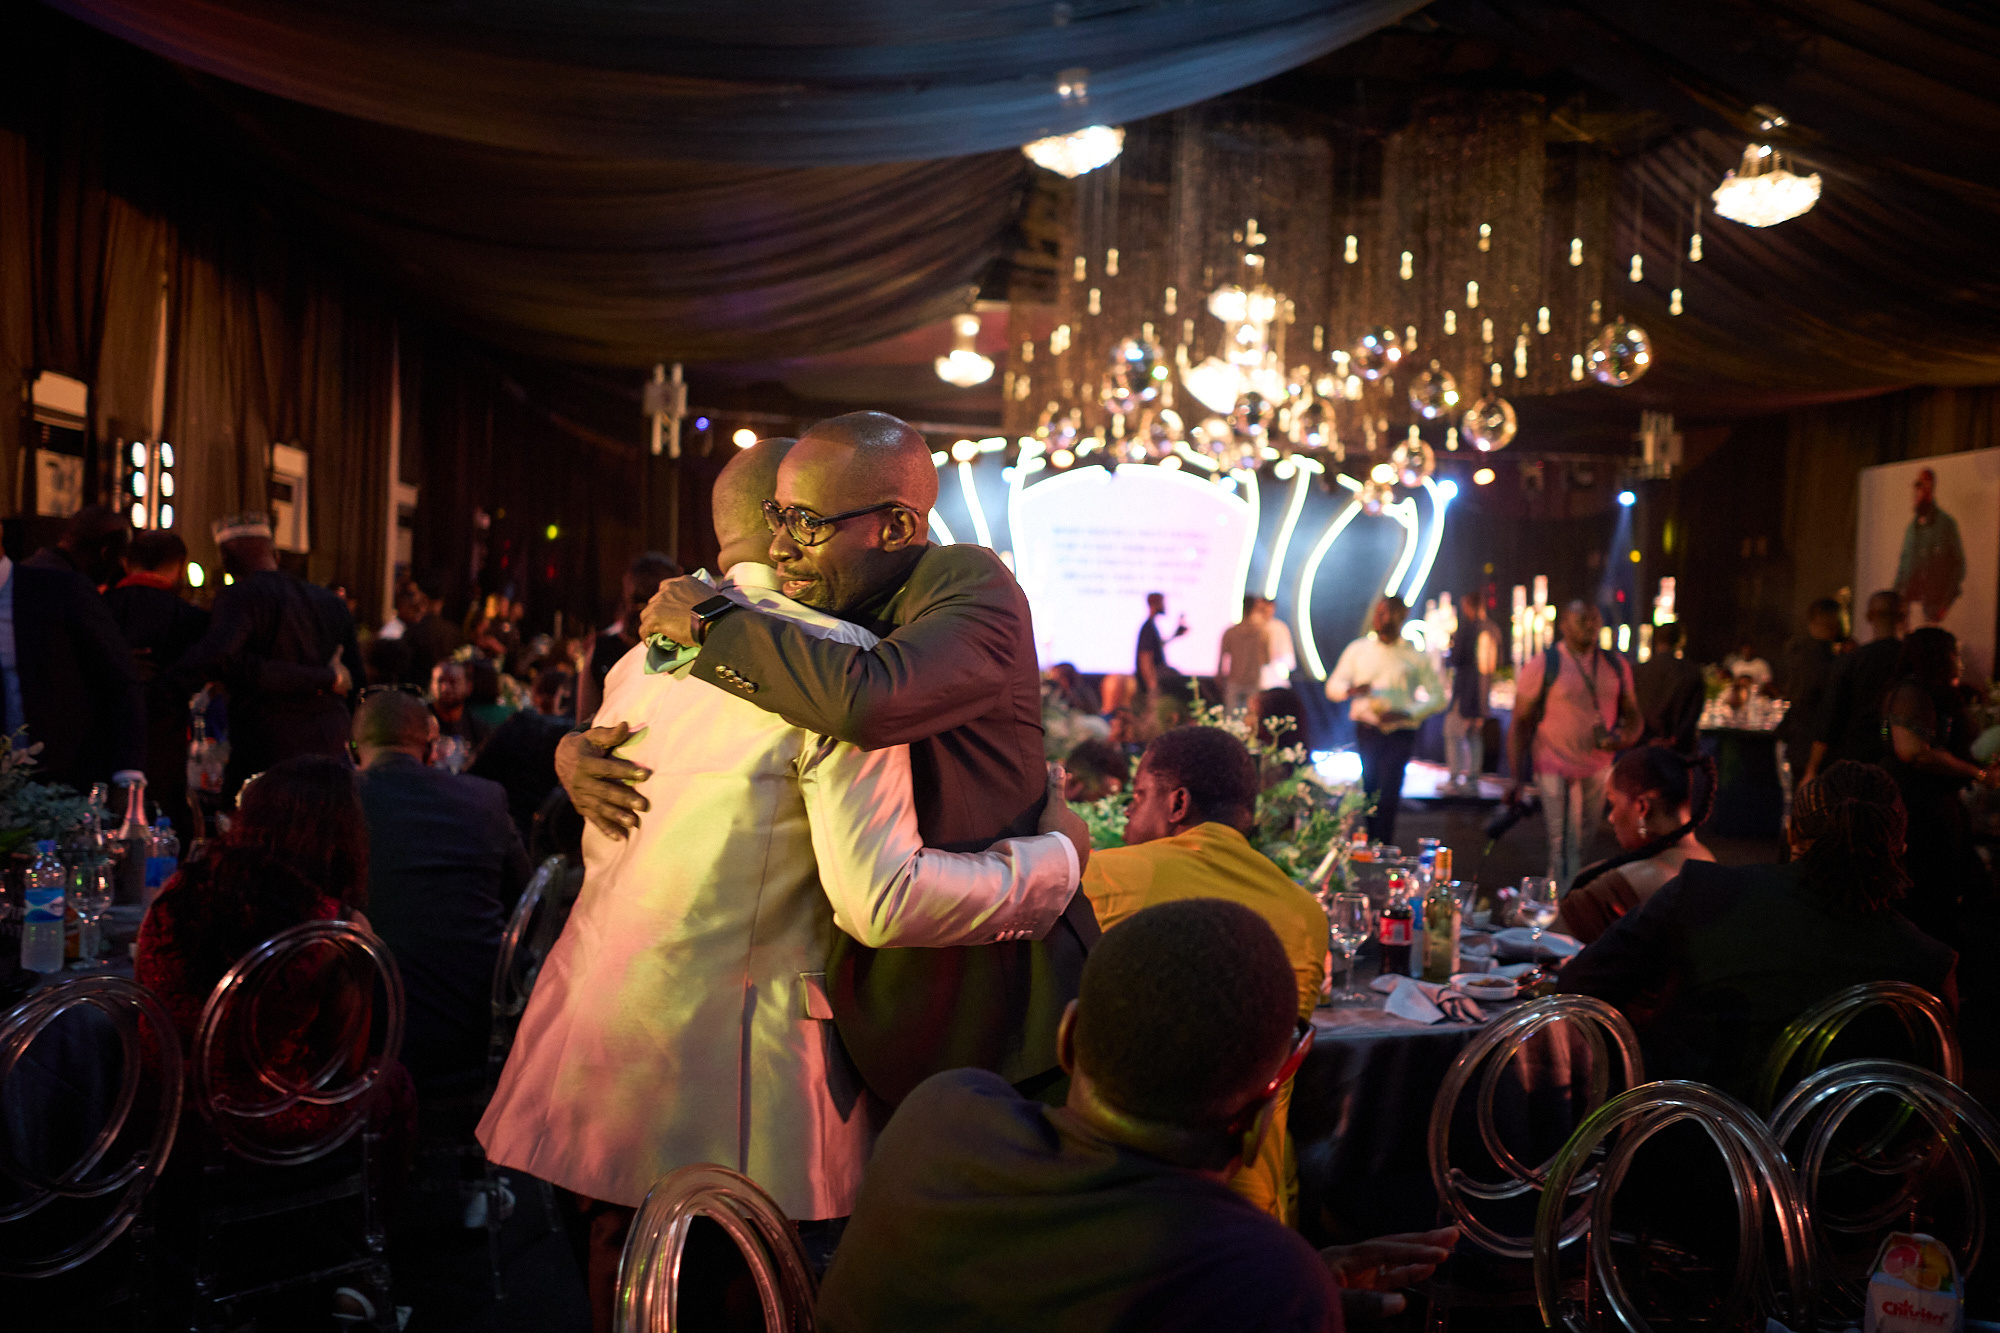 AMS05287 - Photos: Inside Moses Babatope, Film One Co - Founder's 40th Glitz Birthday Celebration